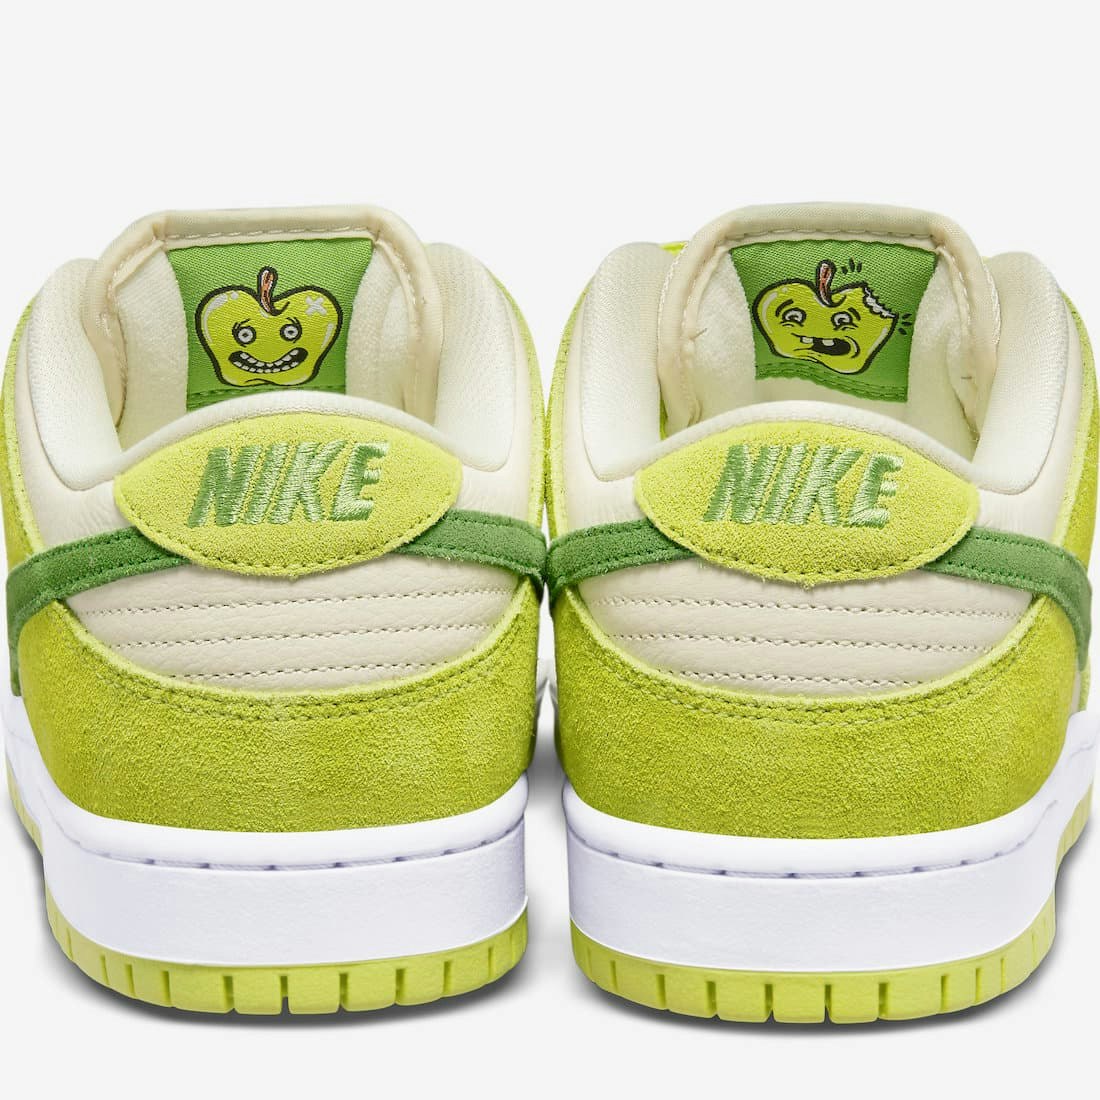 Nike SB Dunk Low  "Green Apple"